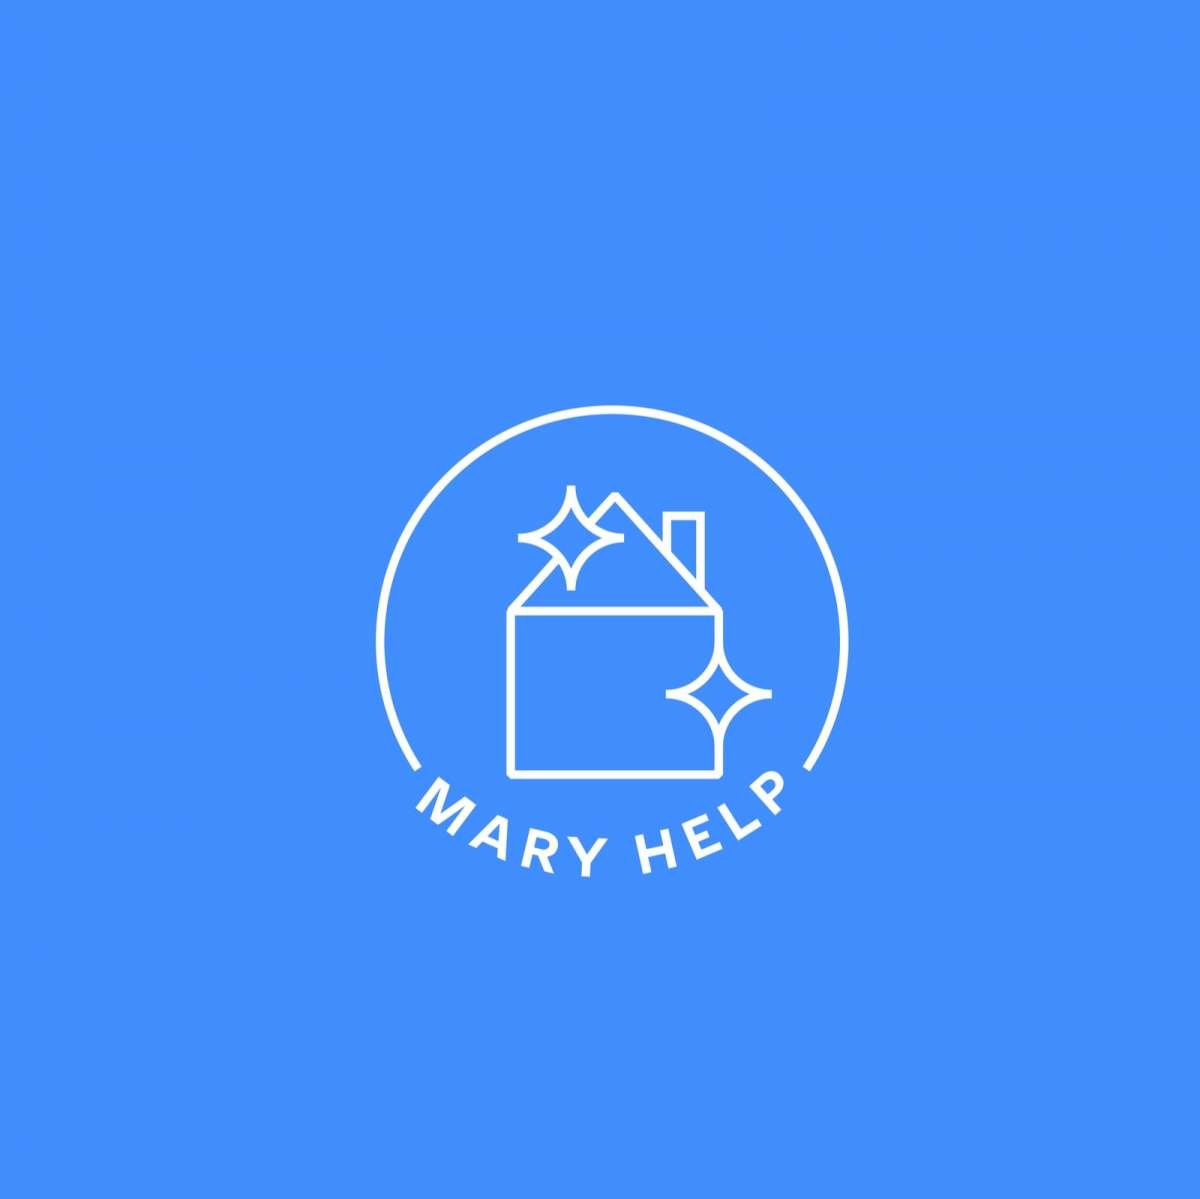 Mary Help - Vila Nova de Gaia - Limpeza de Janelas